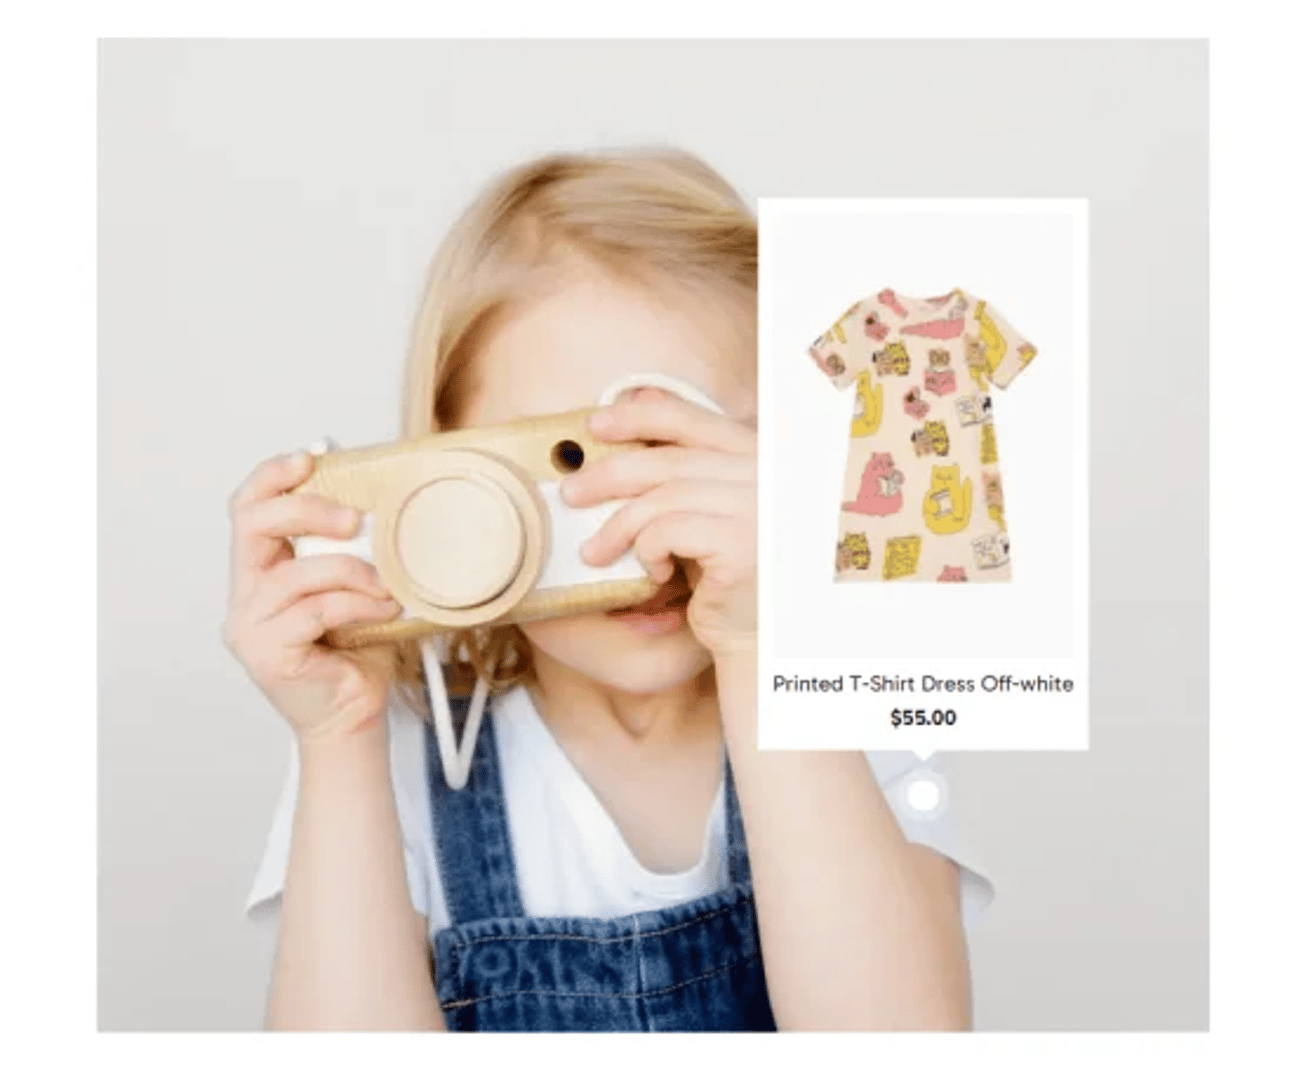 Trendy Baby - Children and Kids Store WordPress Theme - Add Hotspots to Images | Cmsmasters studio